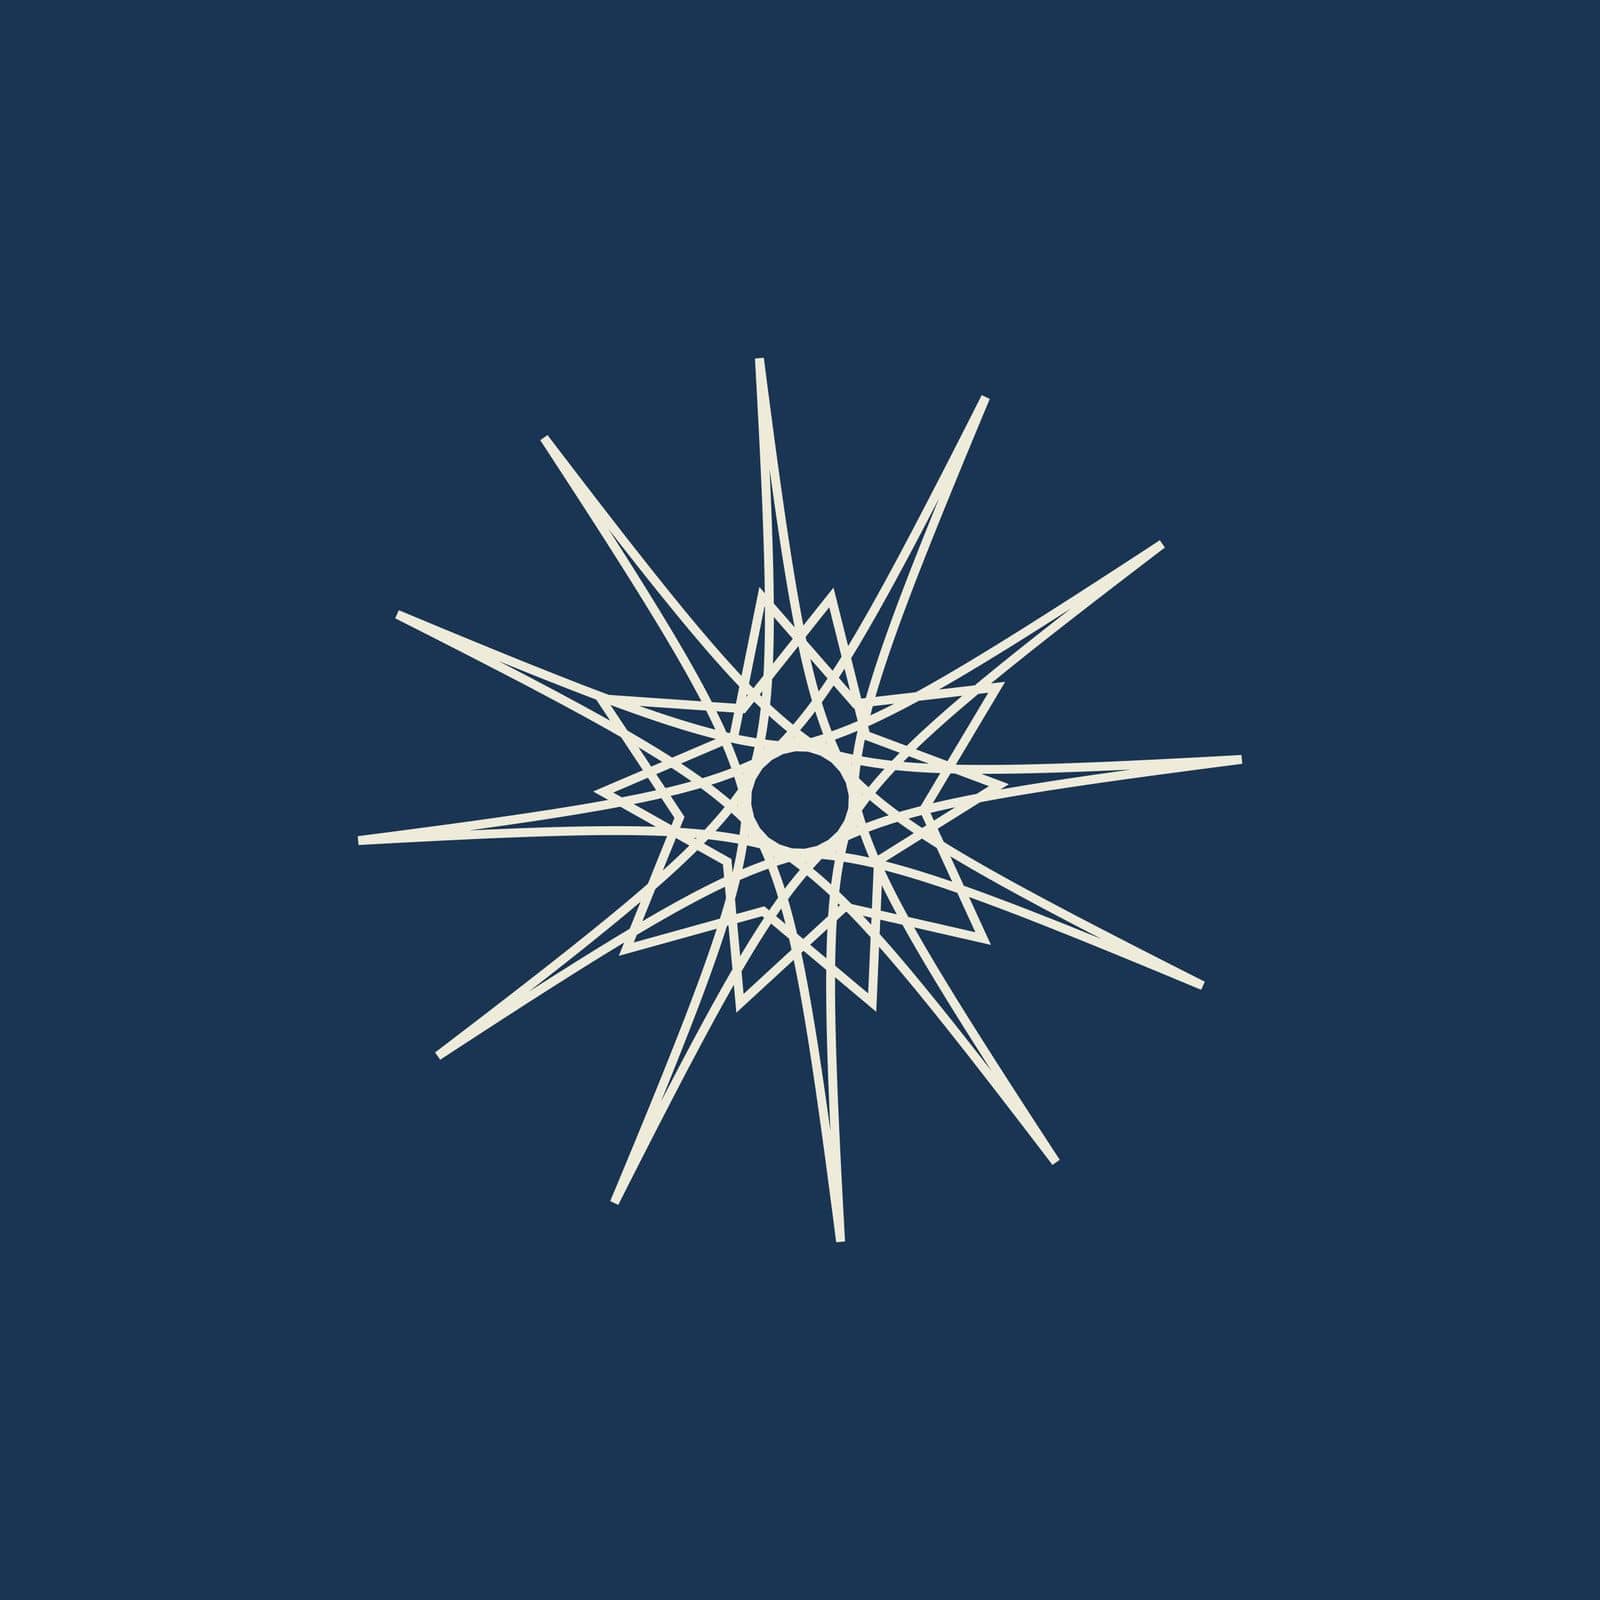 snowflake with sharp corners abstract pattern star by Veranikas